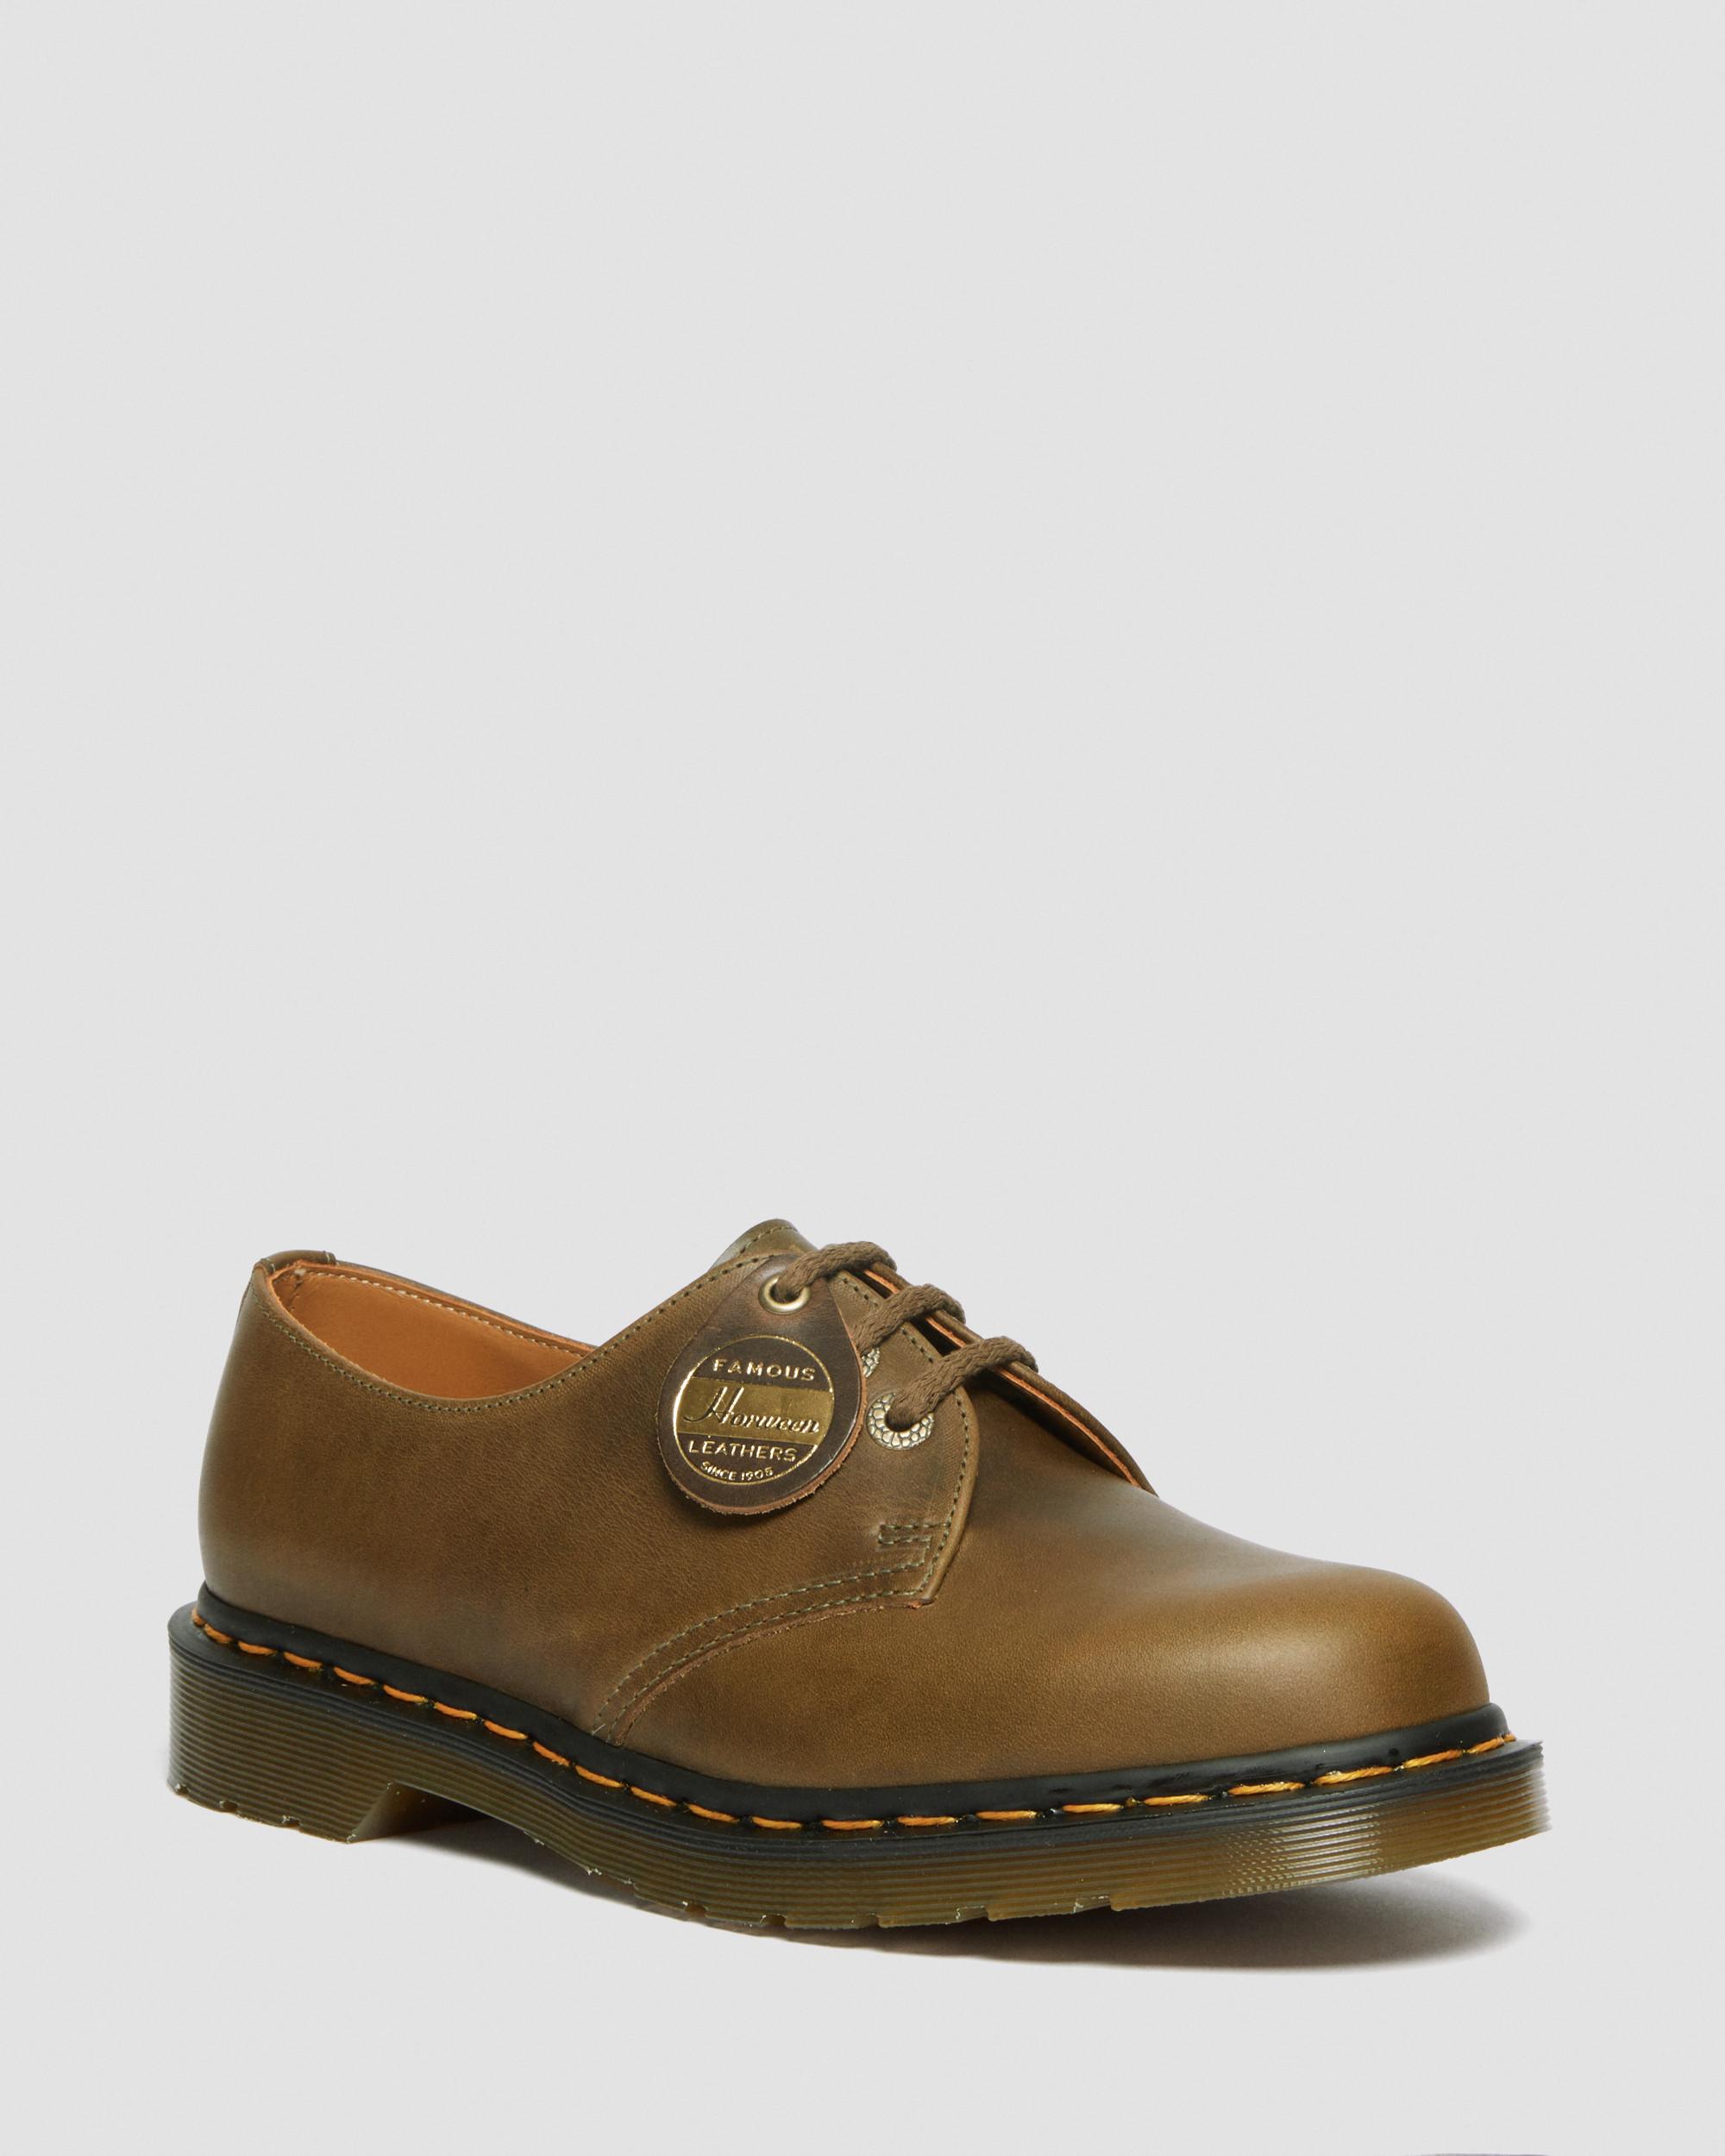 DR MARTENS 1461 Made in England Denver Leather Oxford Shoes